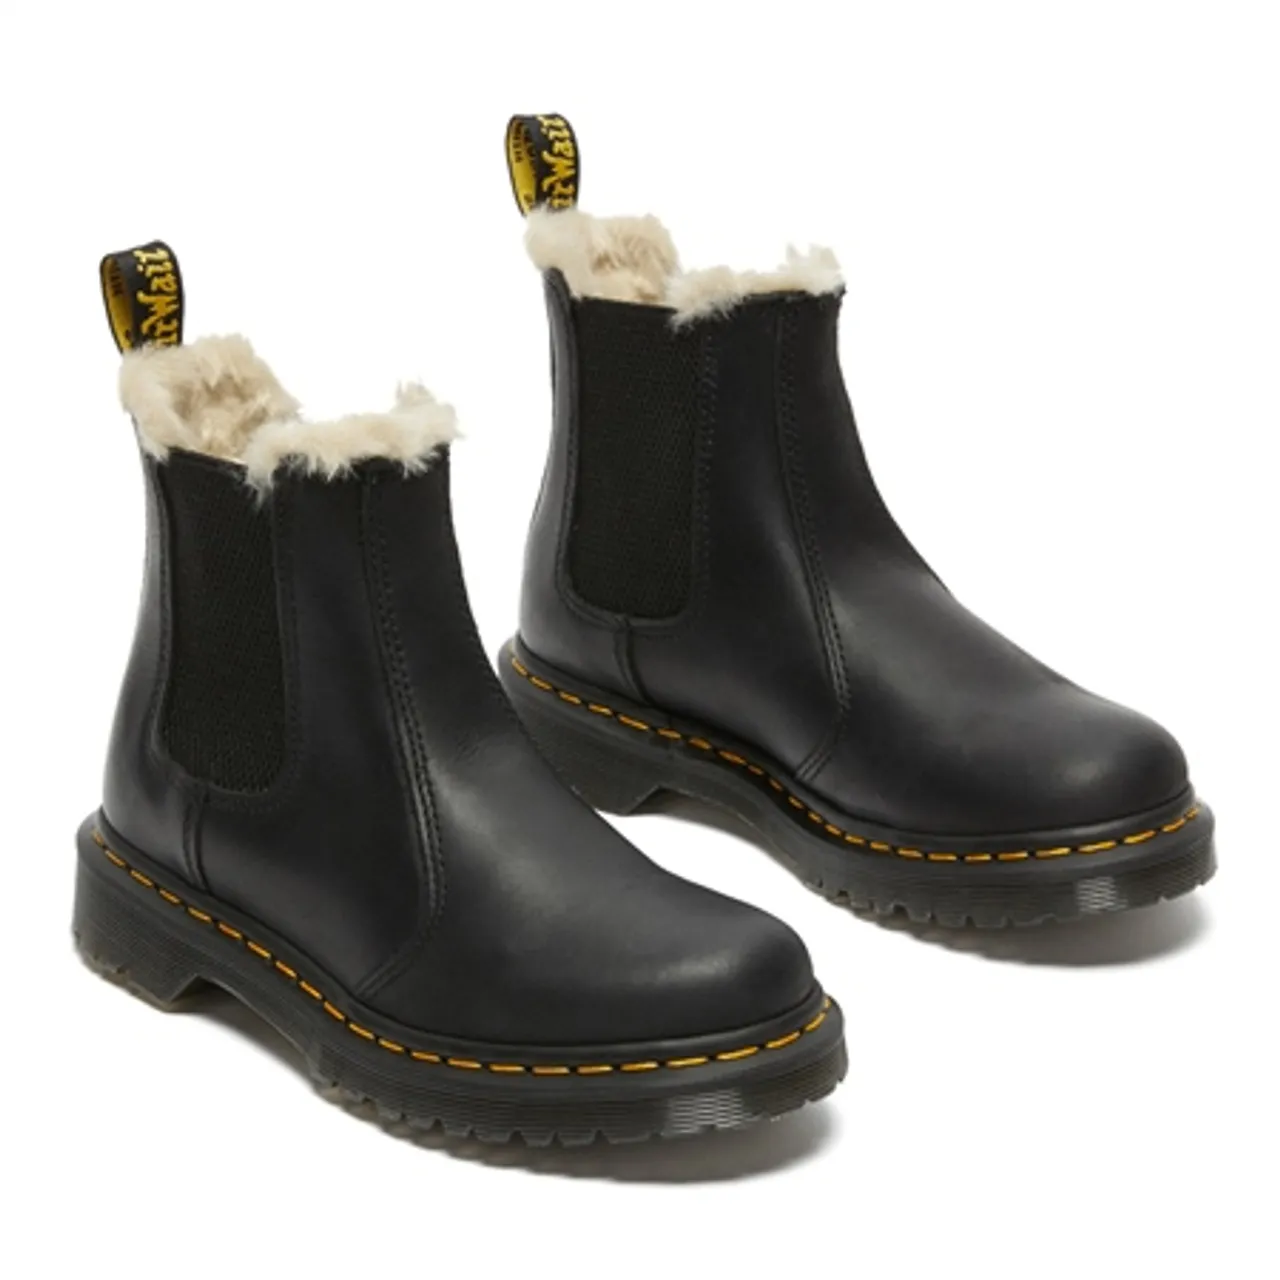 Dr Martens 2976 Leonore Wyoming Boots - Black - UK 4 (EU 37)